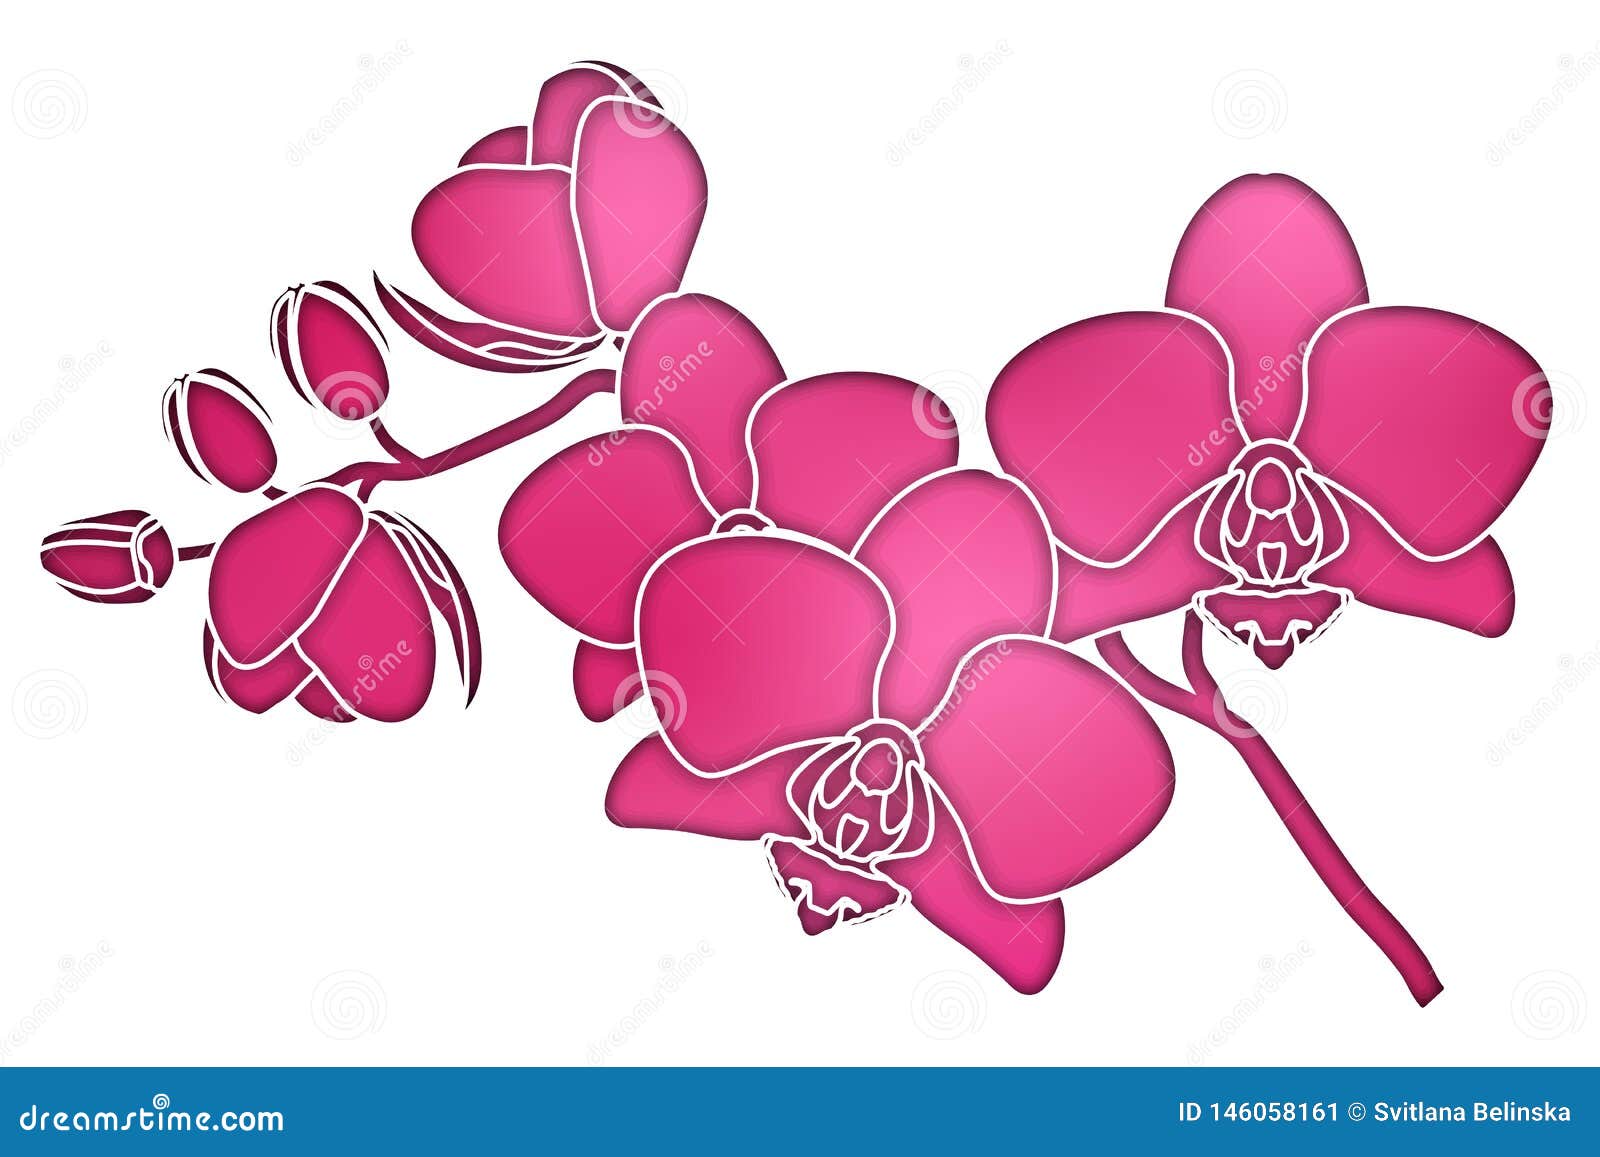 Эскиз орхидеи для логотипа